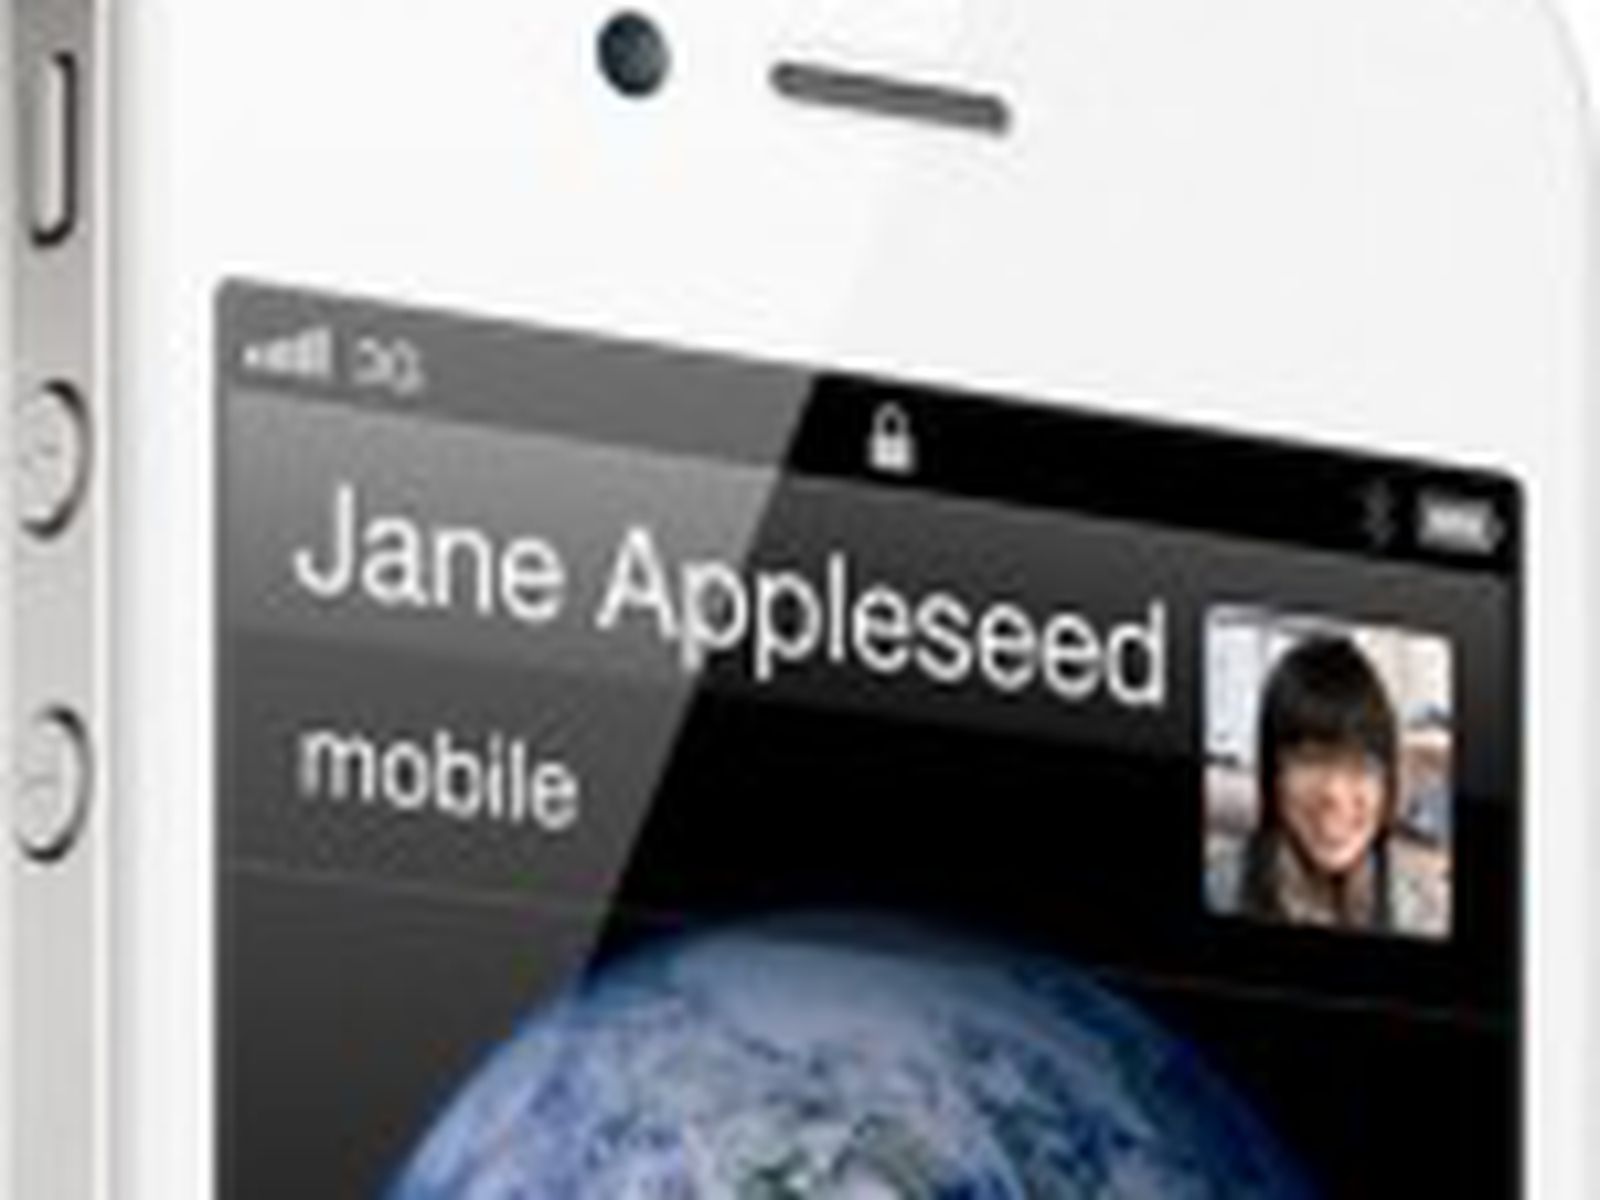 Apple iPhone 4S 32GB -White (Verizon) Cell Phone (Page Plus) r Good